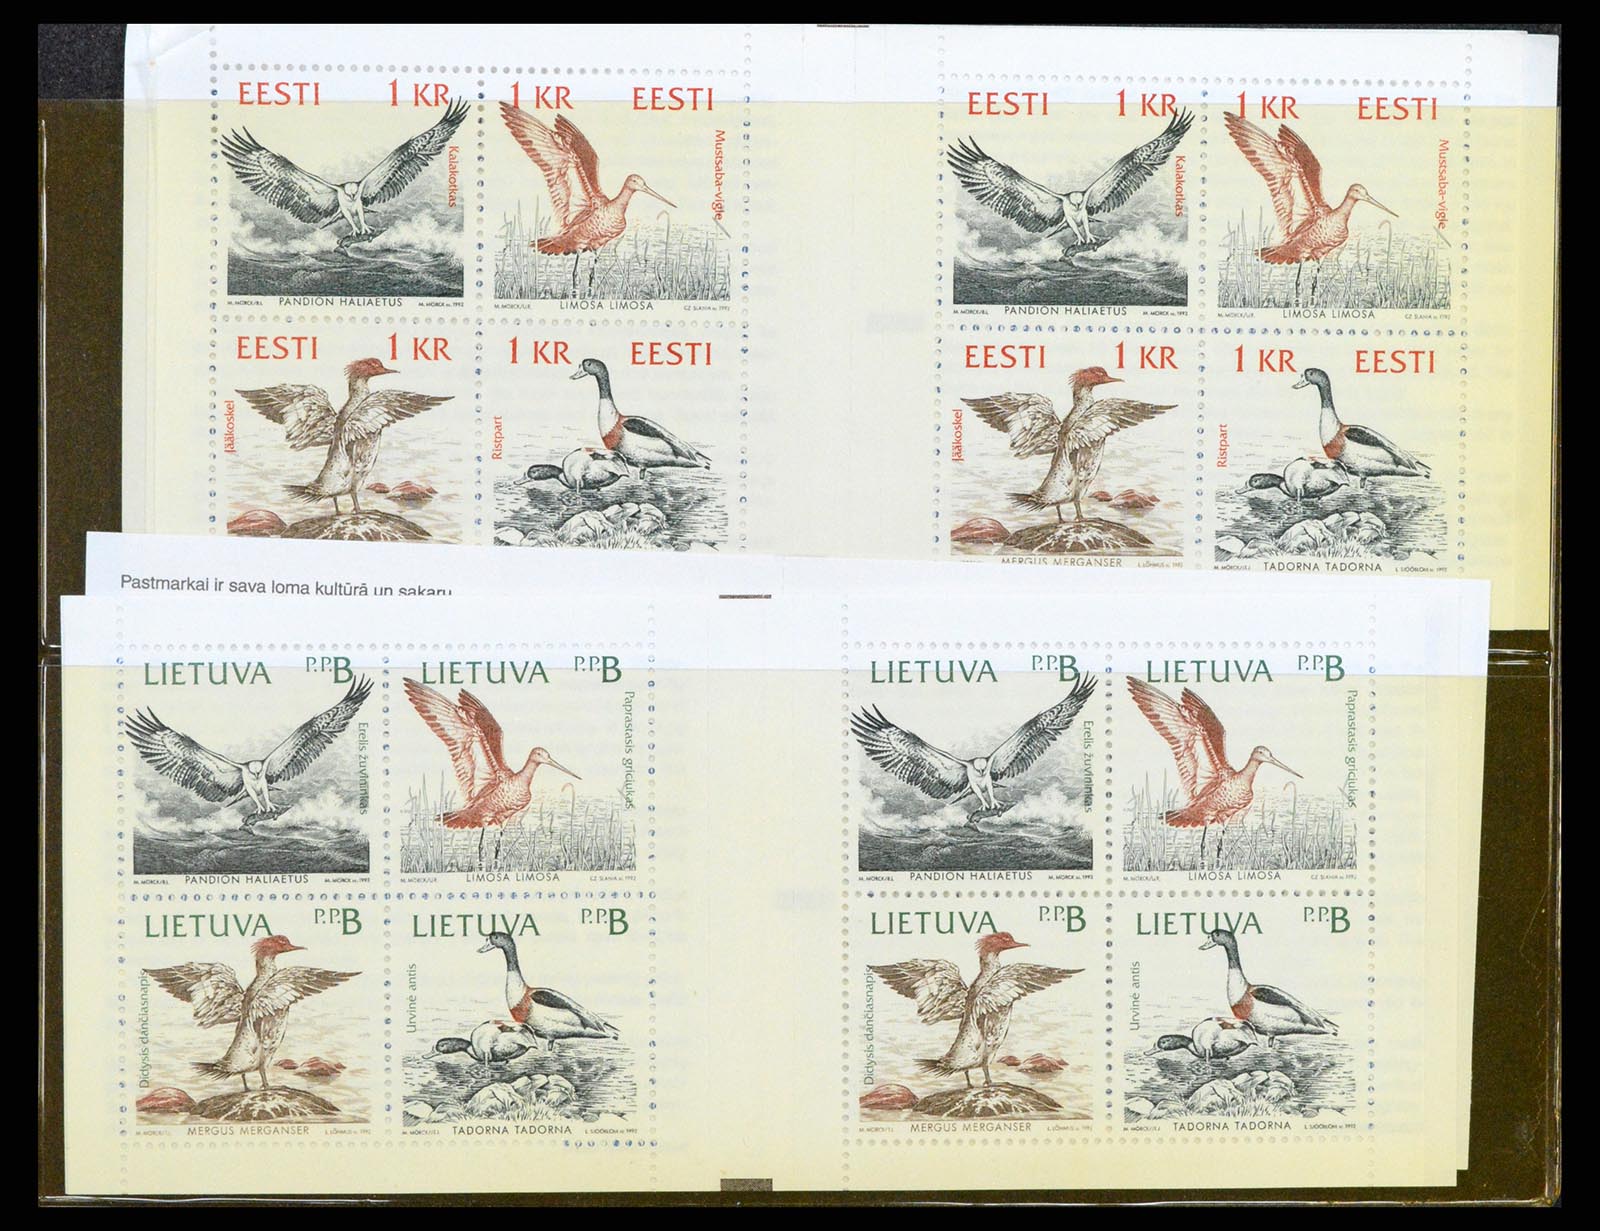 37341 011 - Stamp collection 37341 Sweden stamp booklets.